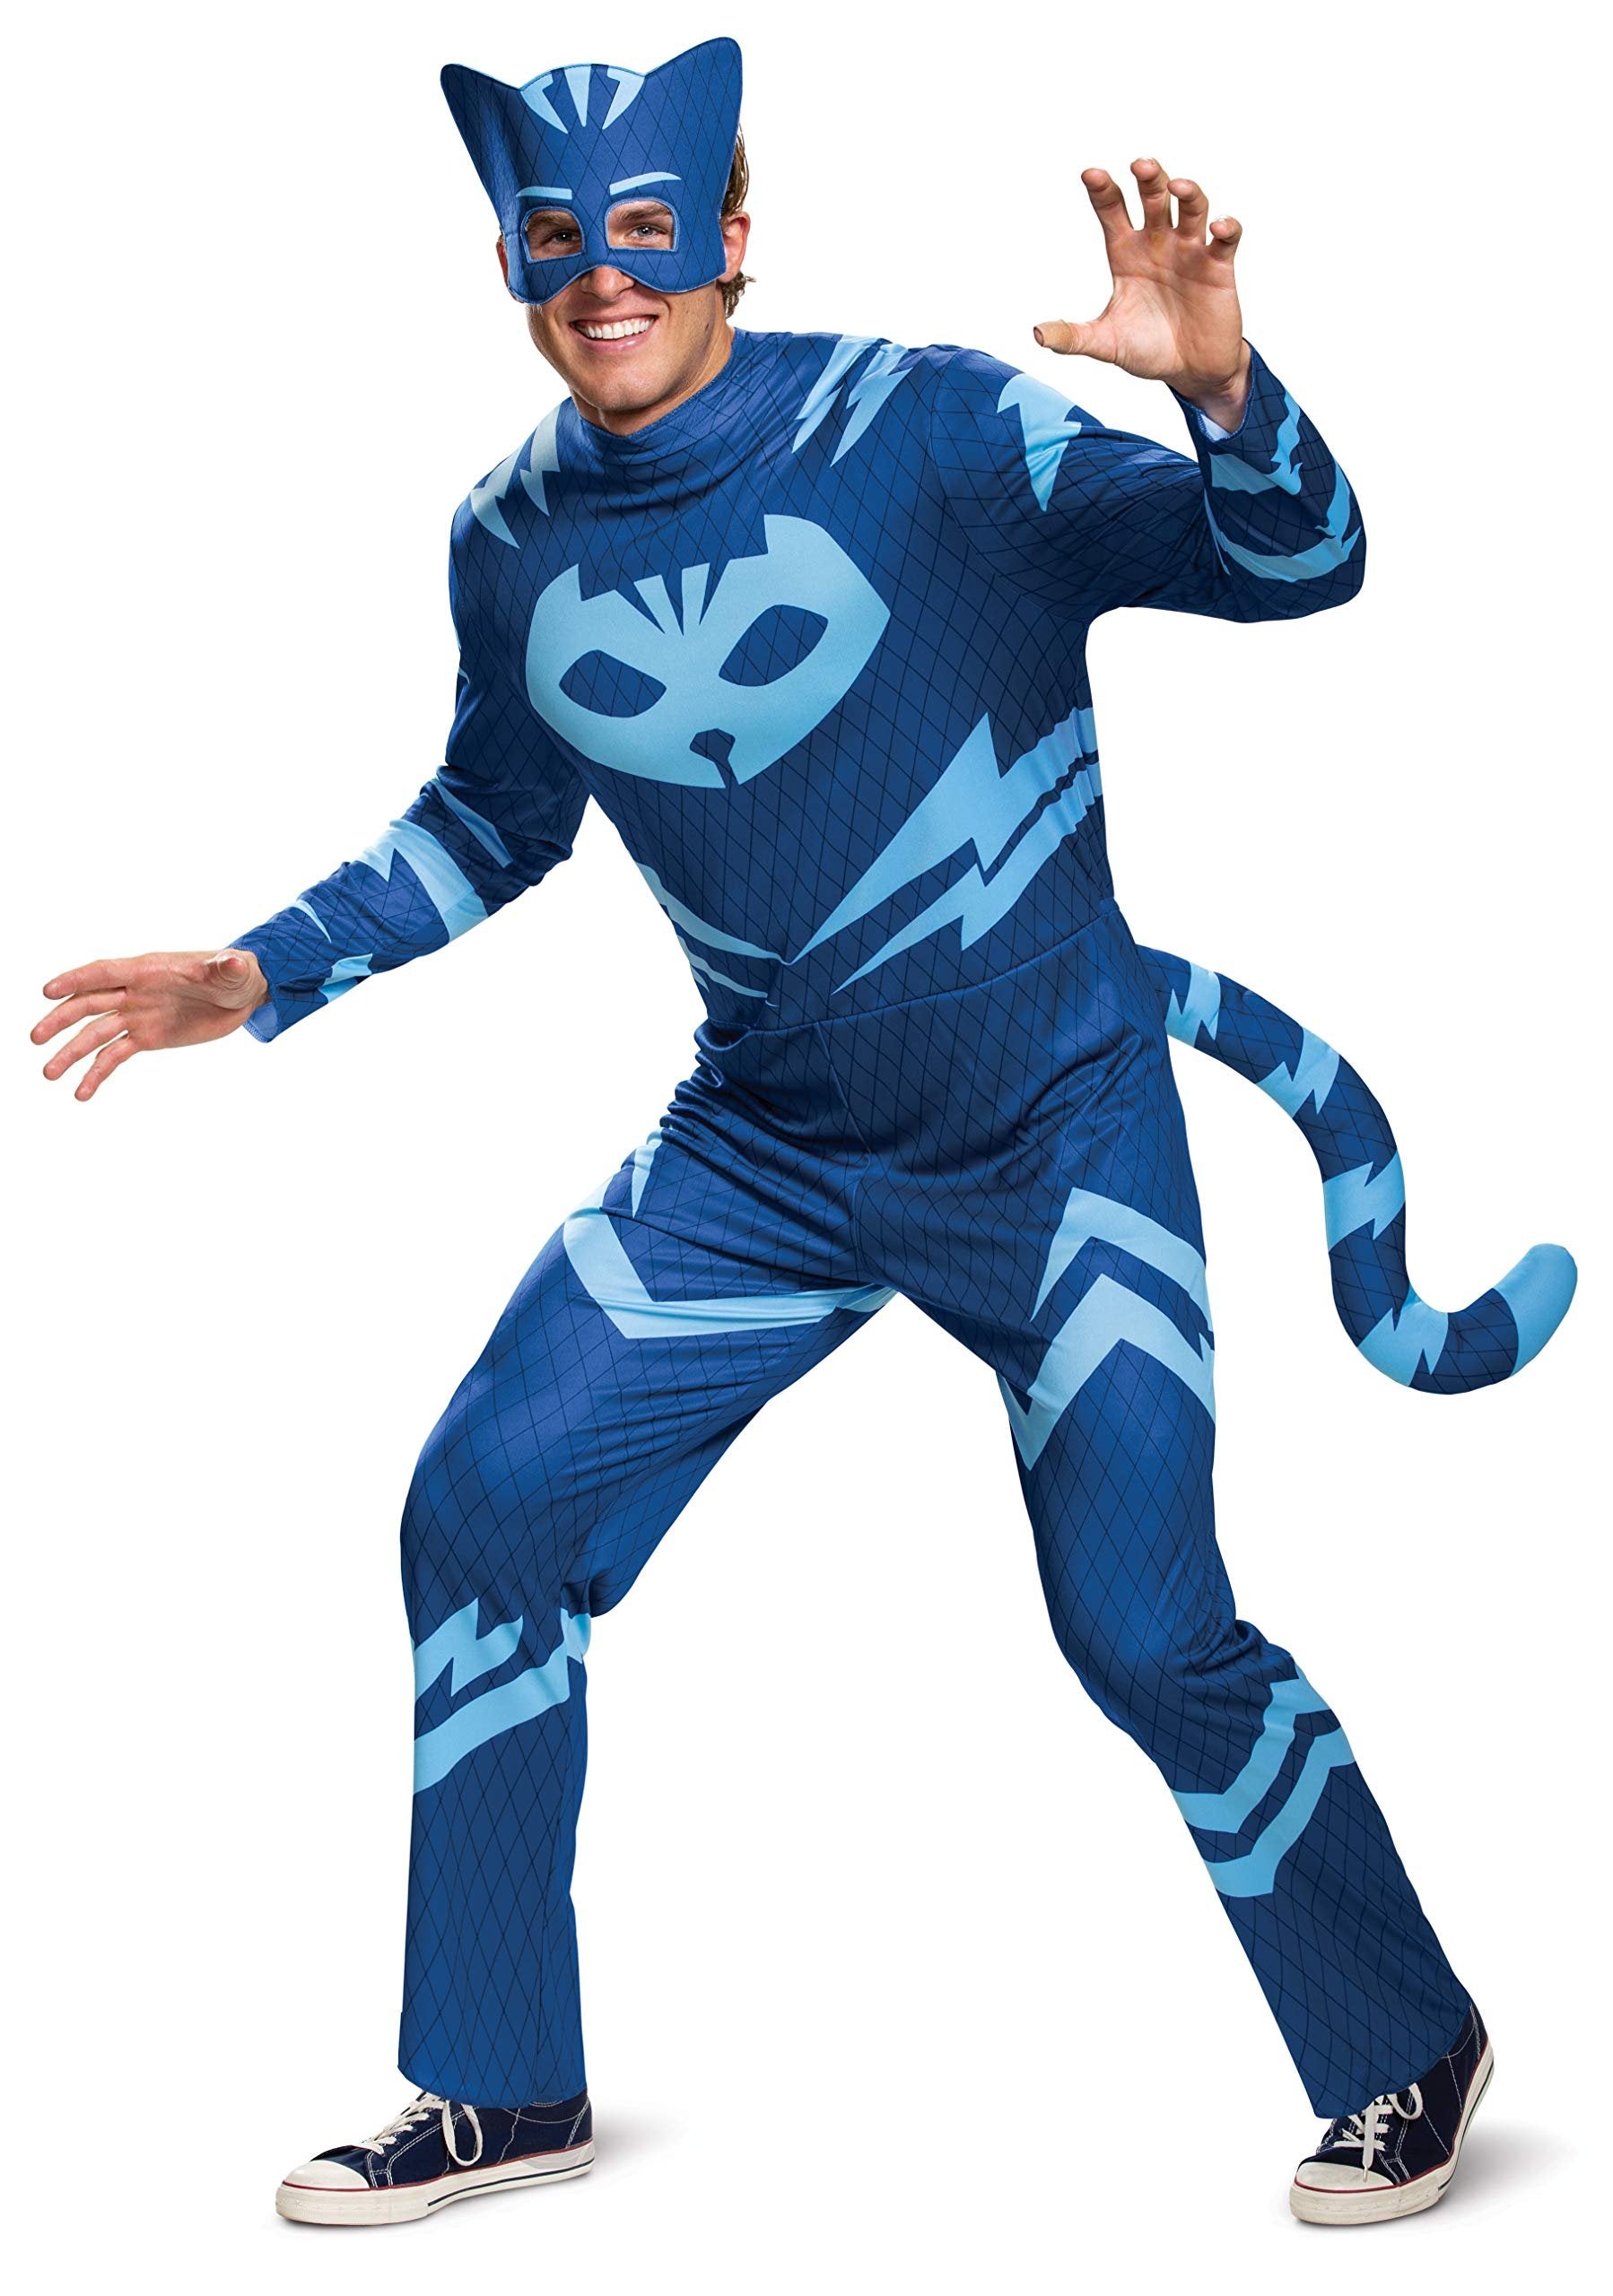 Disguise Men's Catboy Classic Adult Costume Adult Costume, Blue, L/XL (42-46)